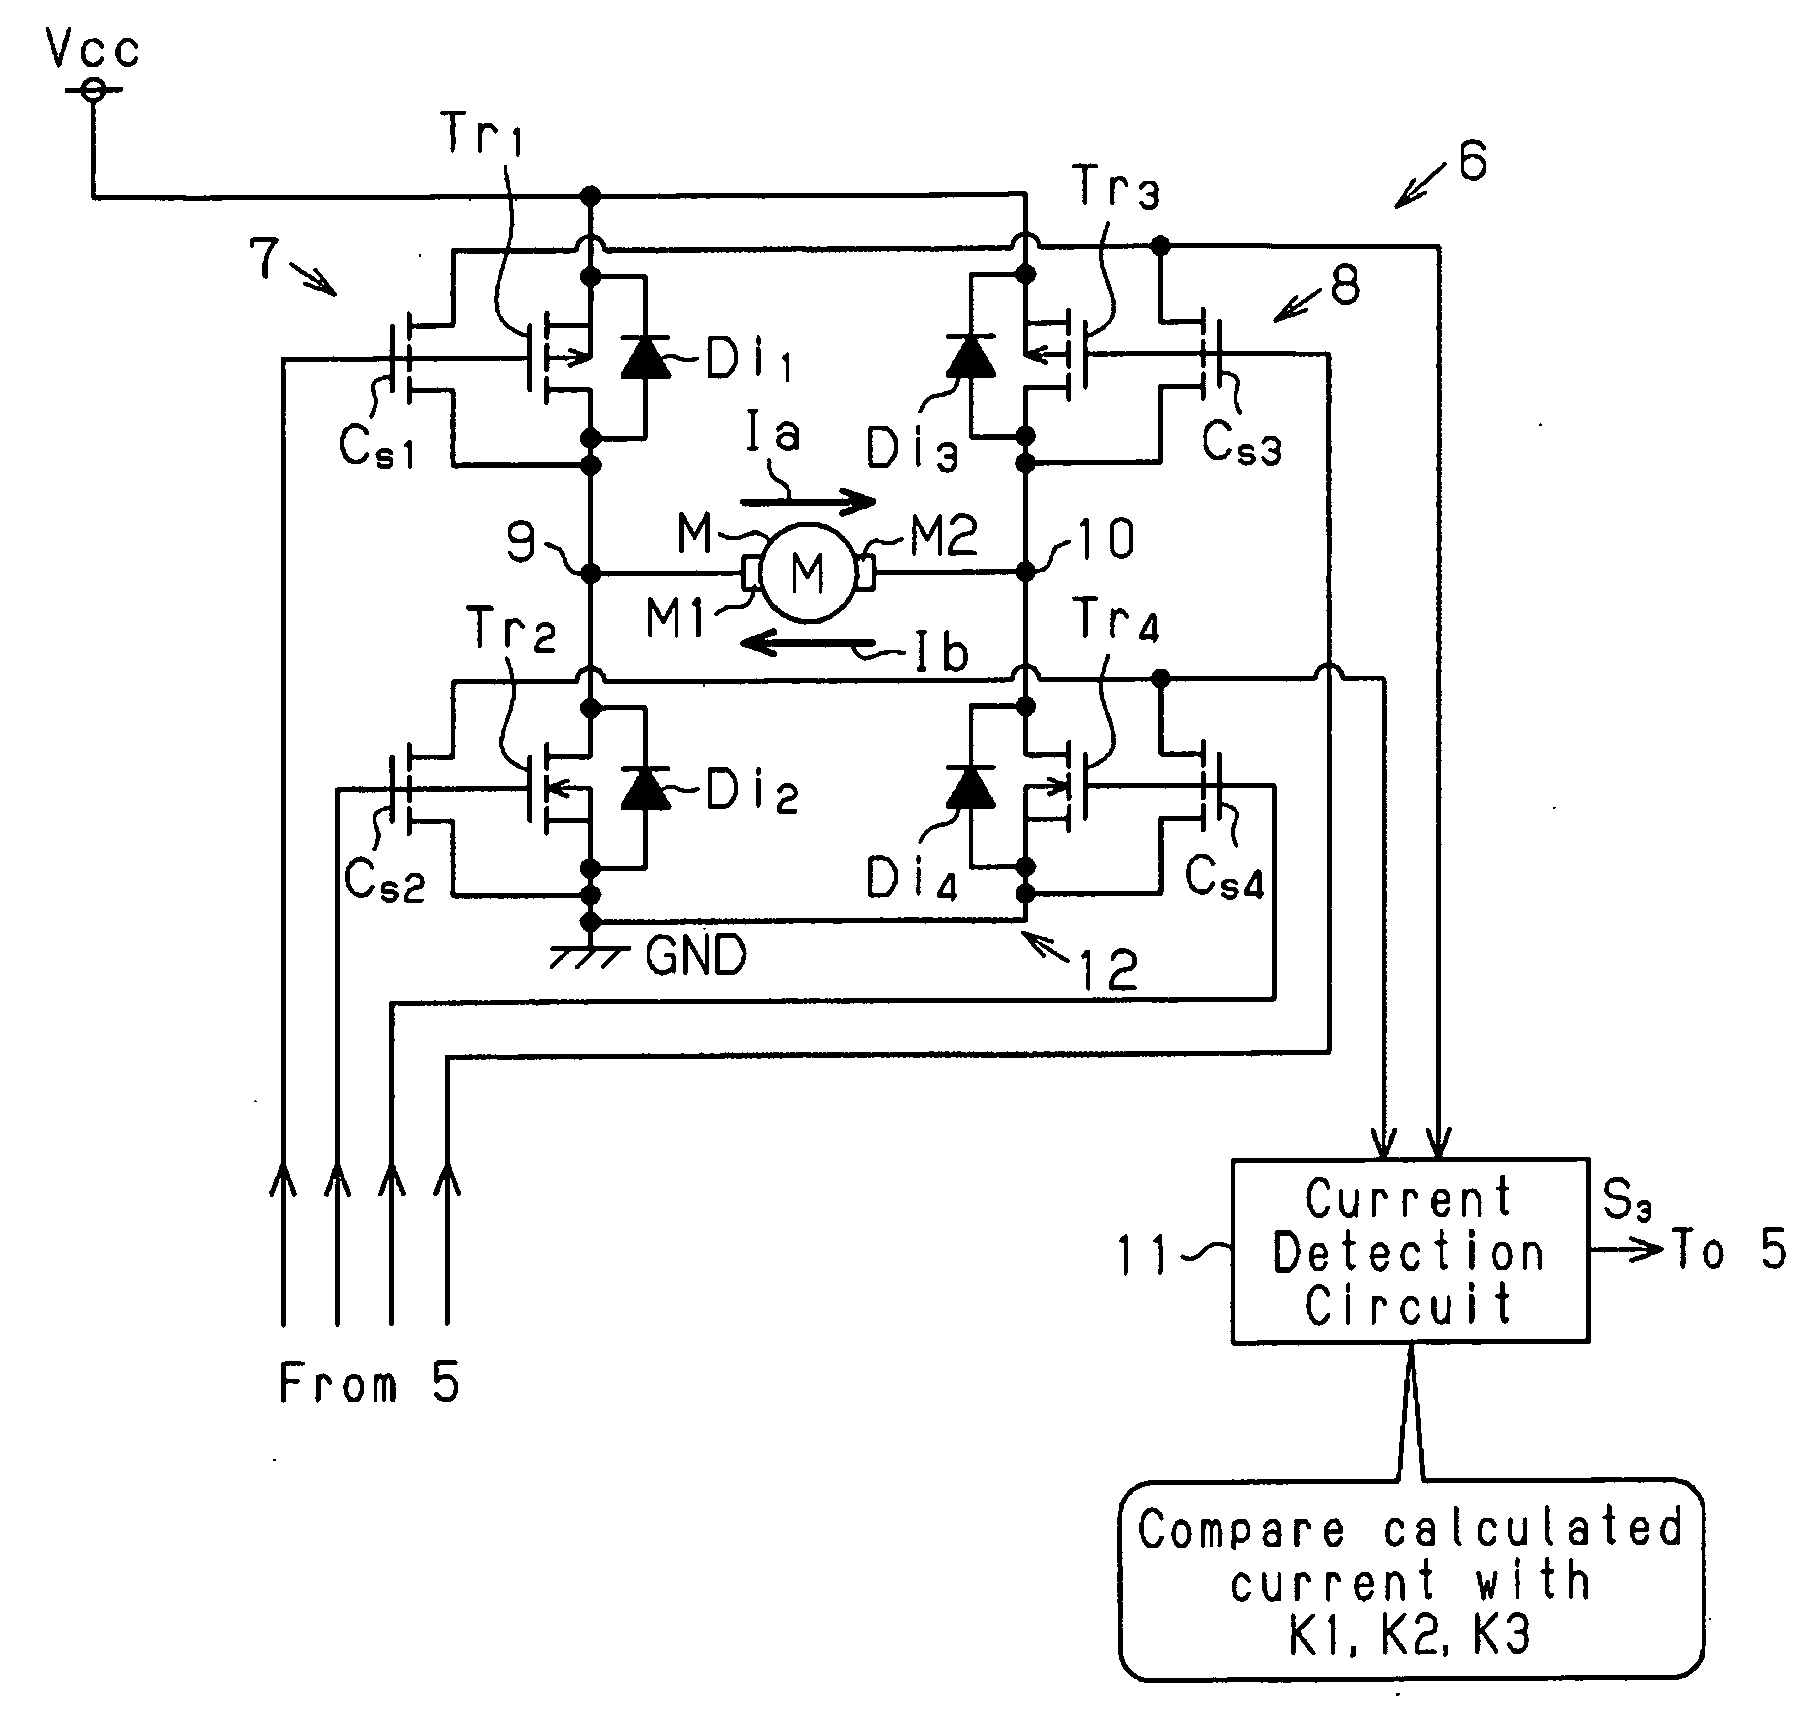 Load drive control circuit